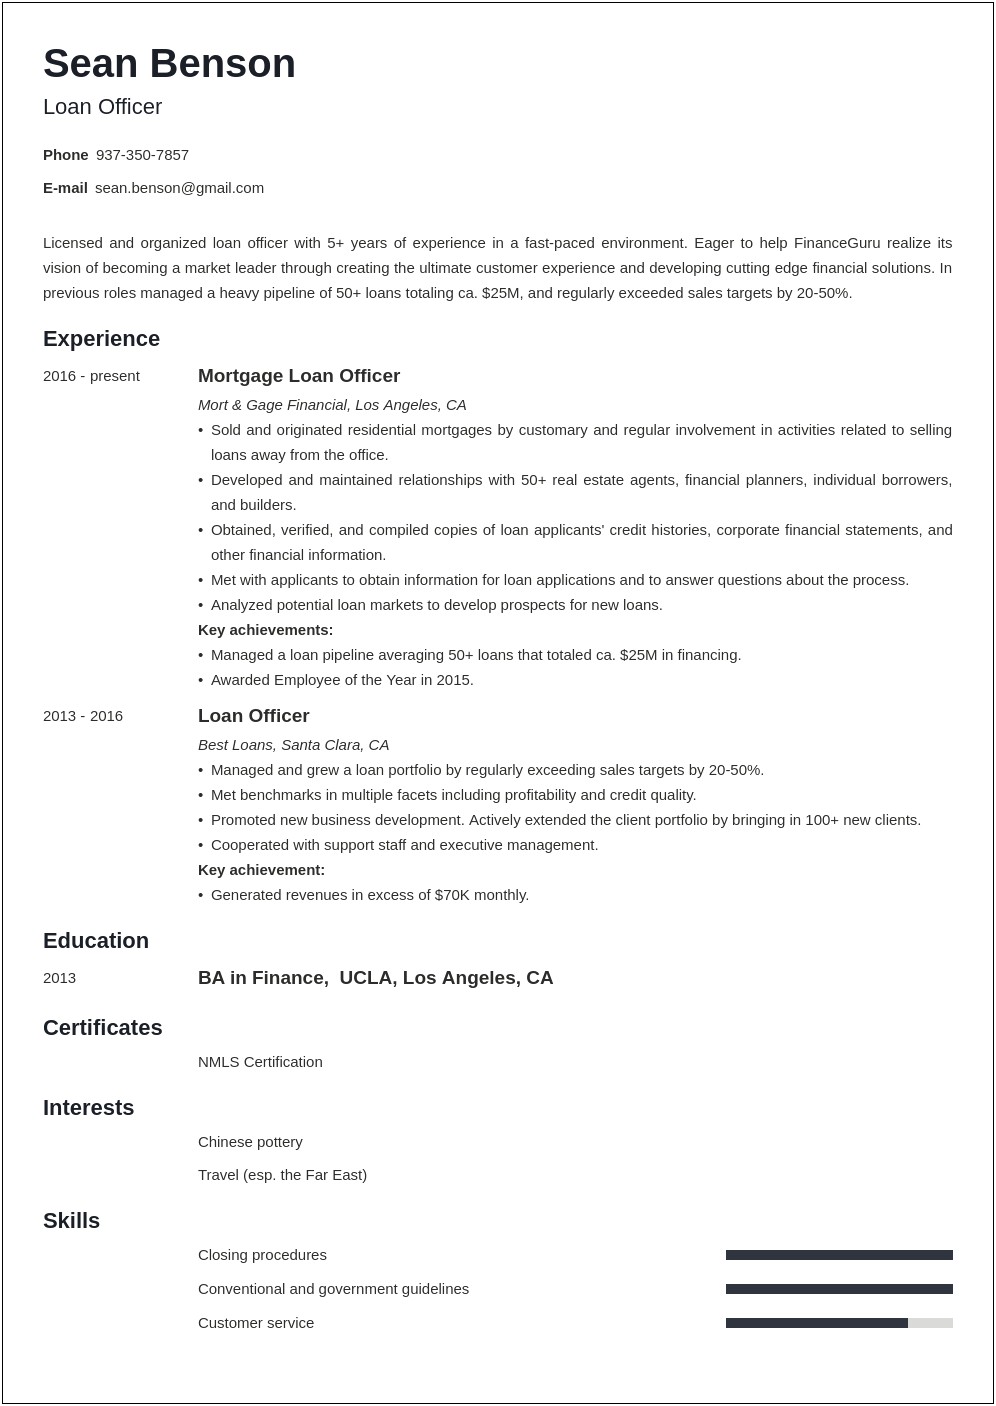 Sample Senior Mortgage Underwriter Resume